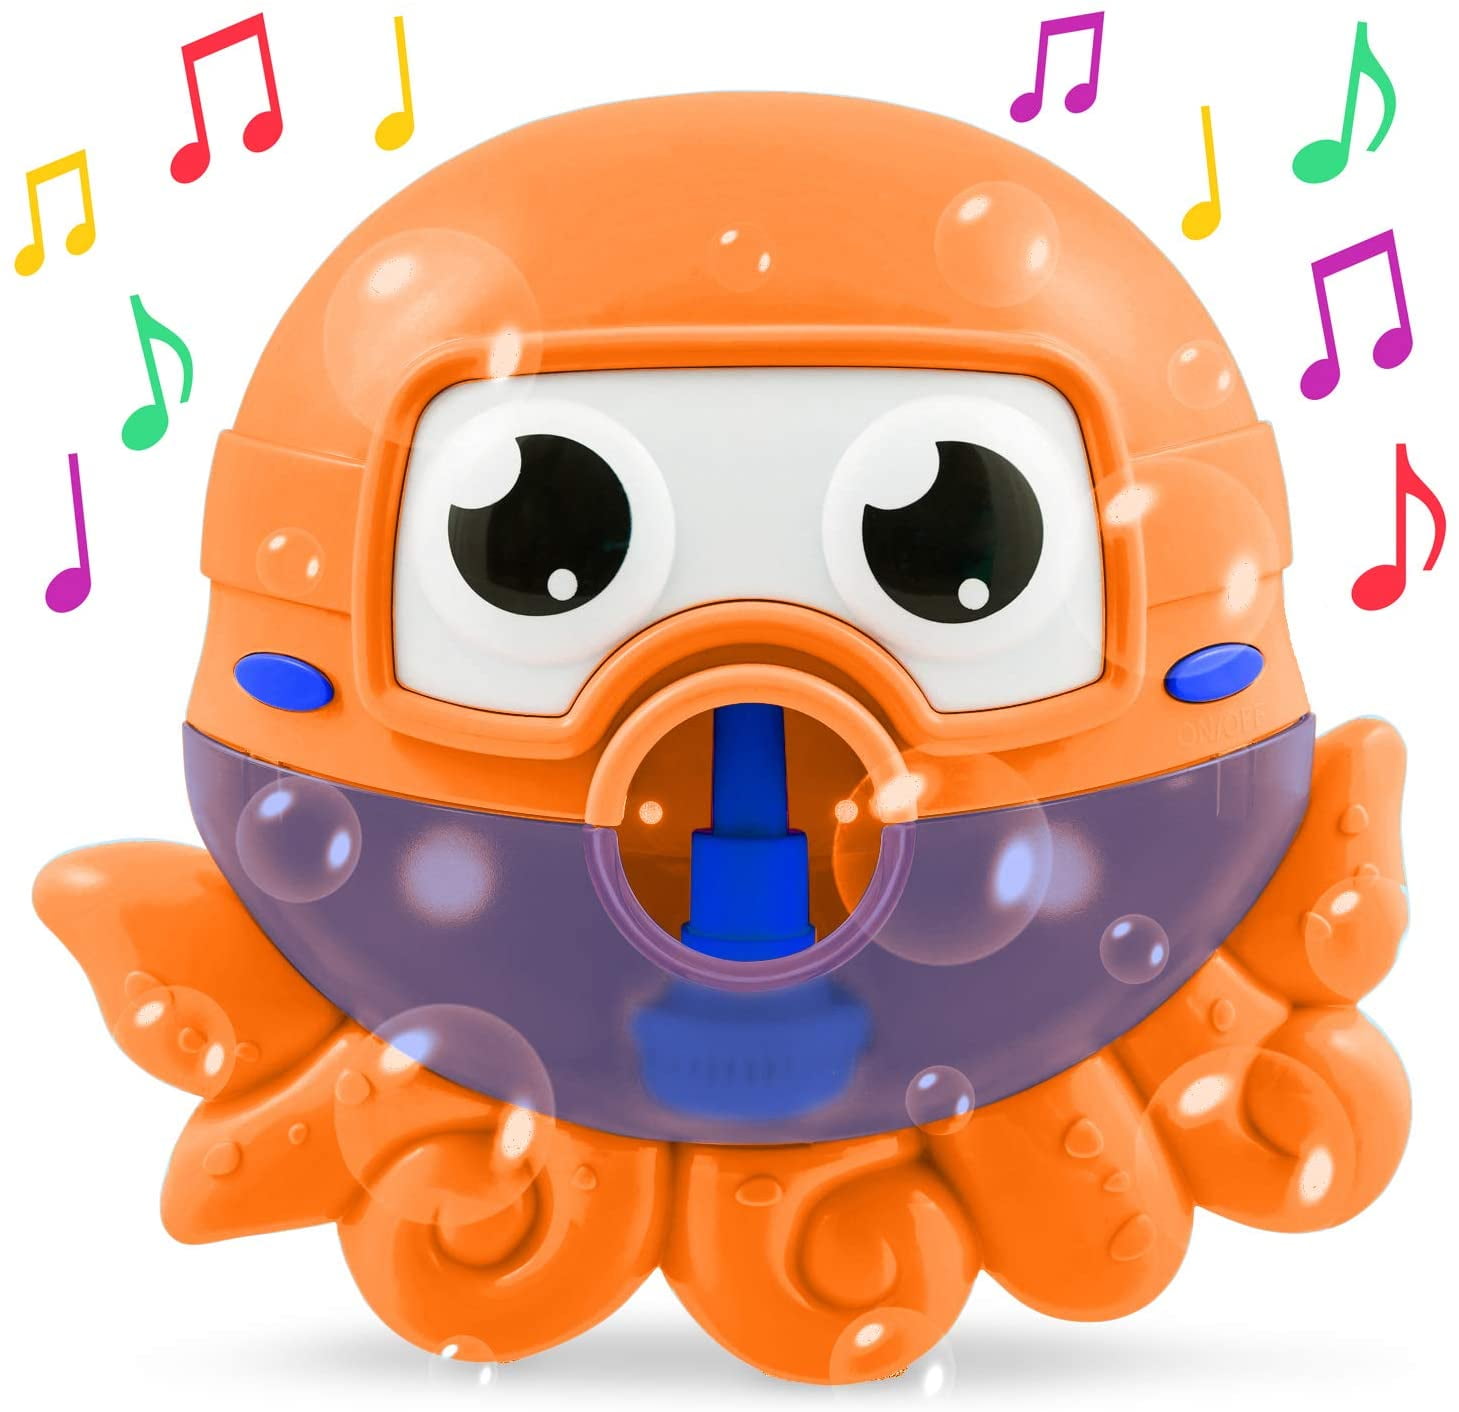 octopus bubble bath toy